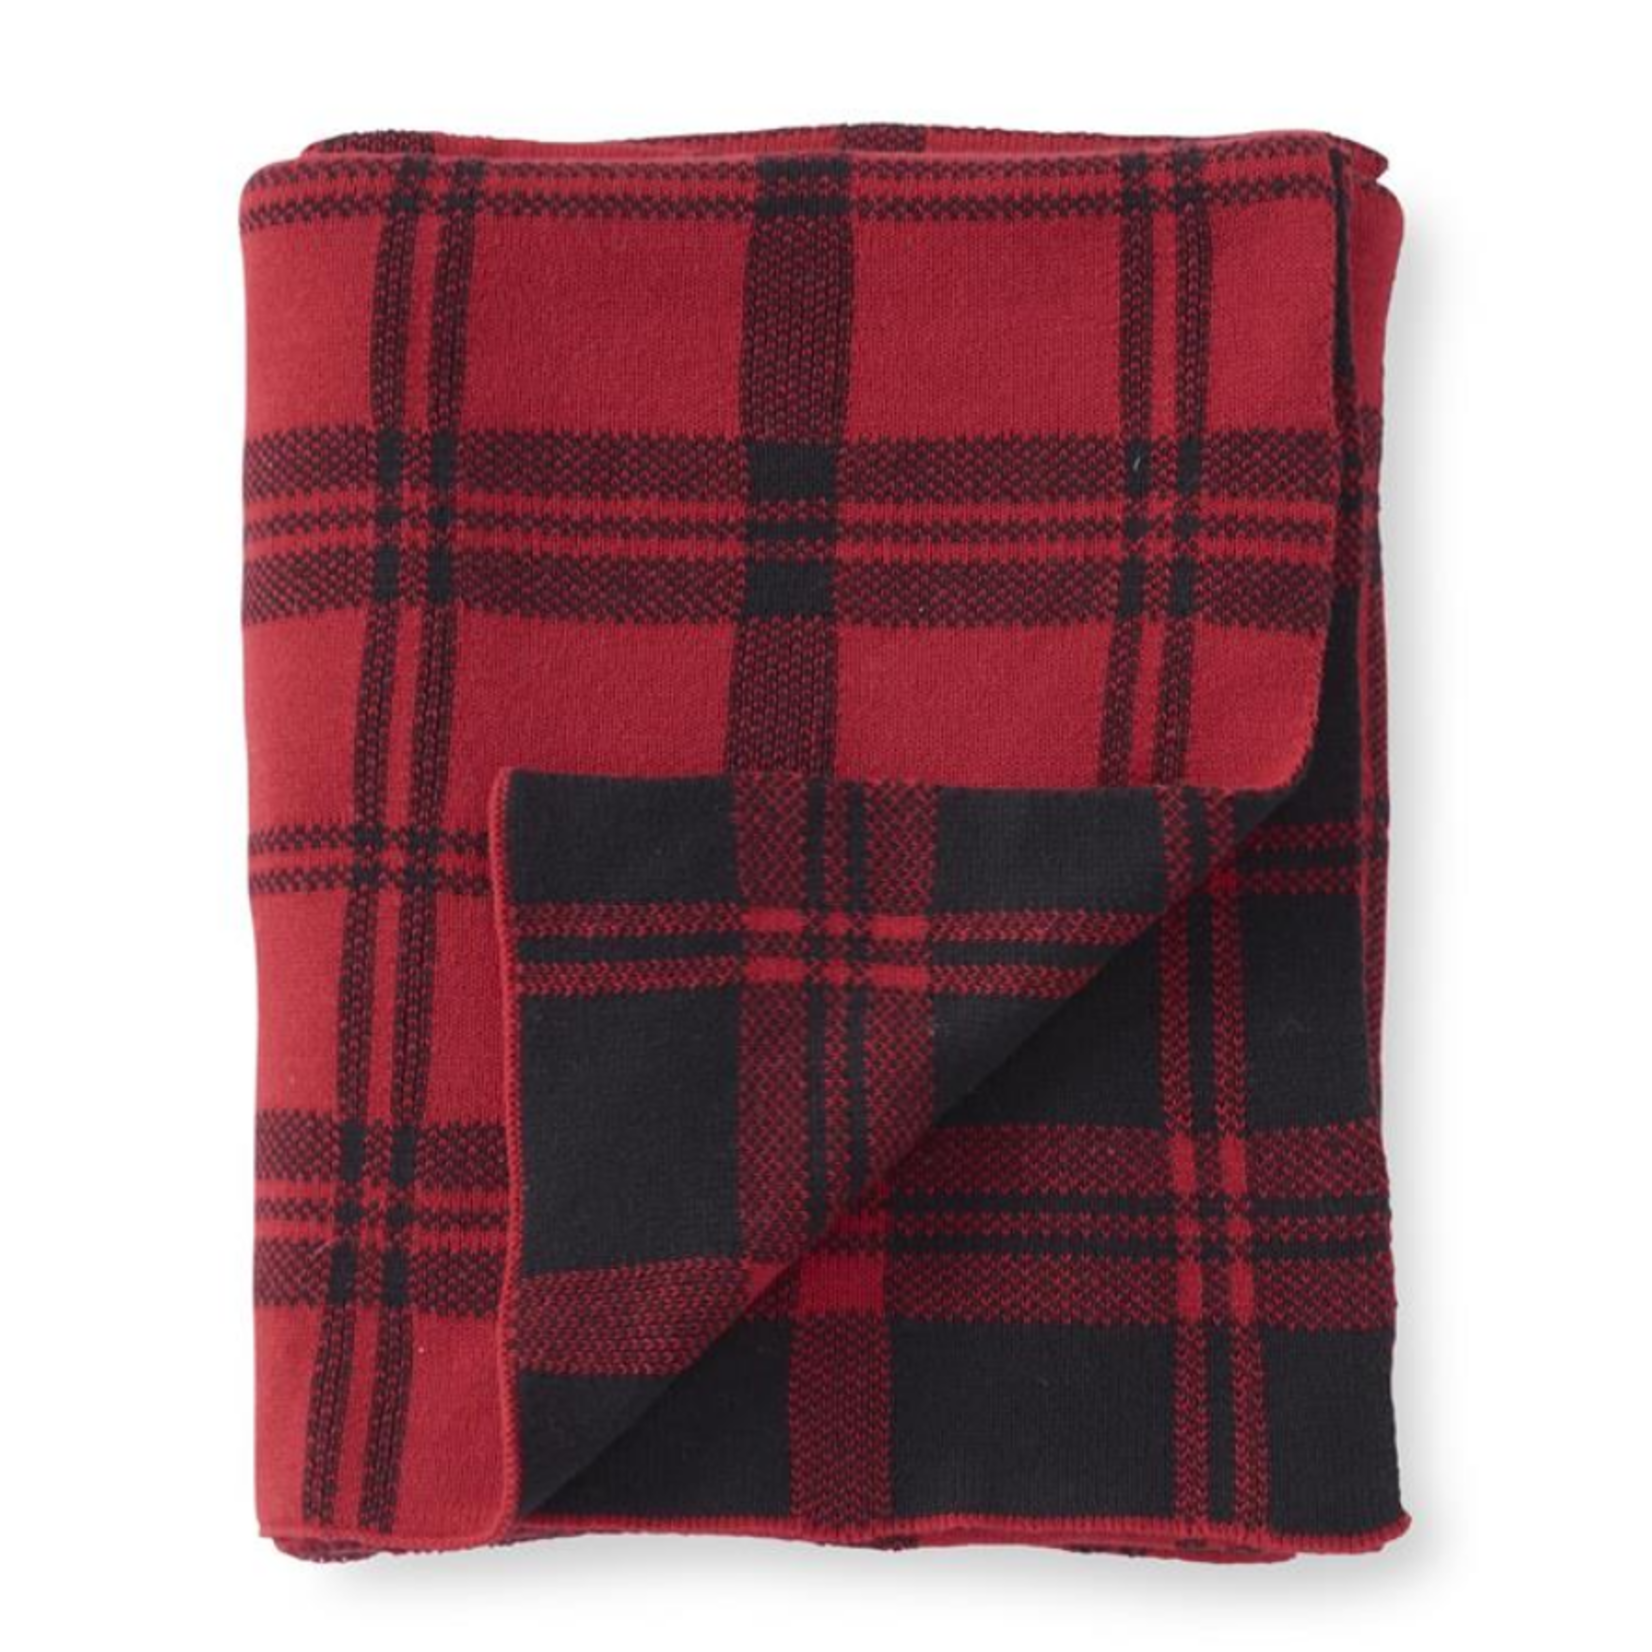 Cotton Knit Throw Blanket, Red & Black